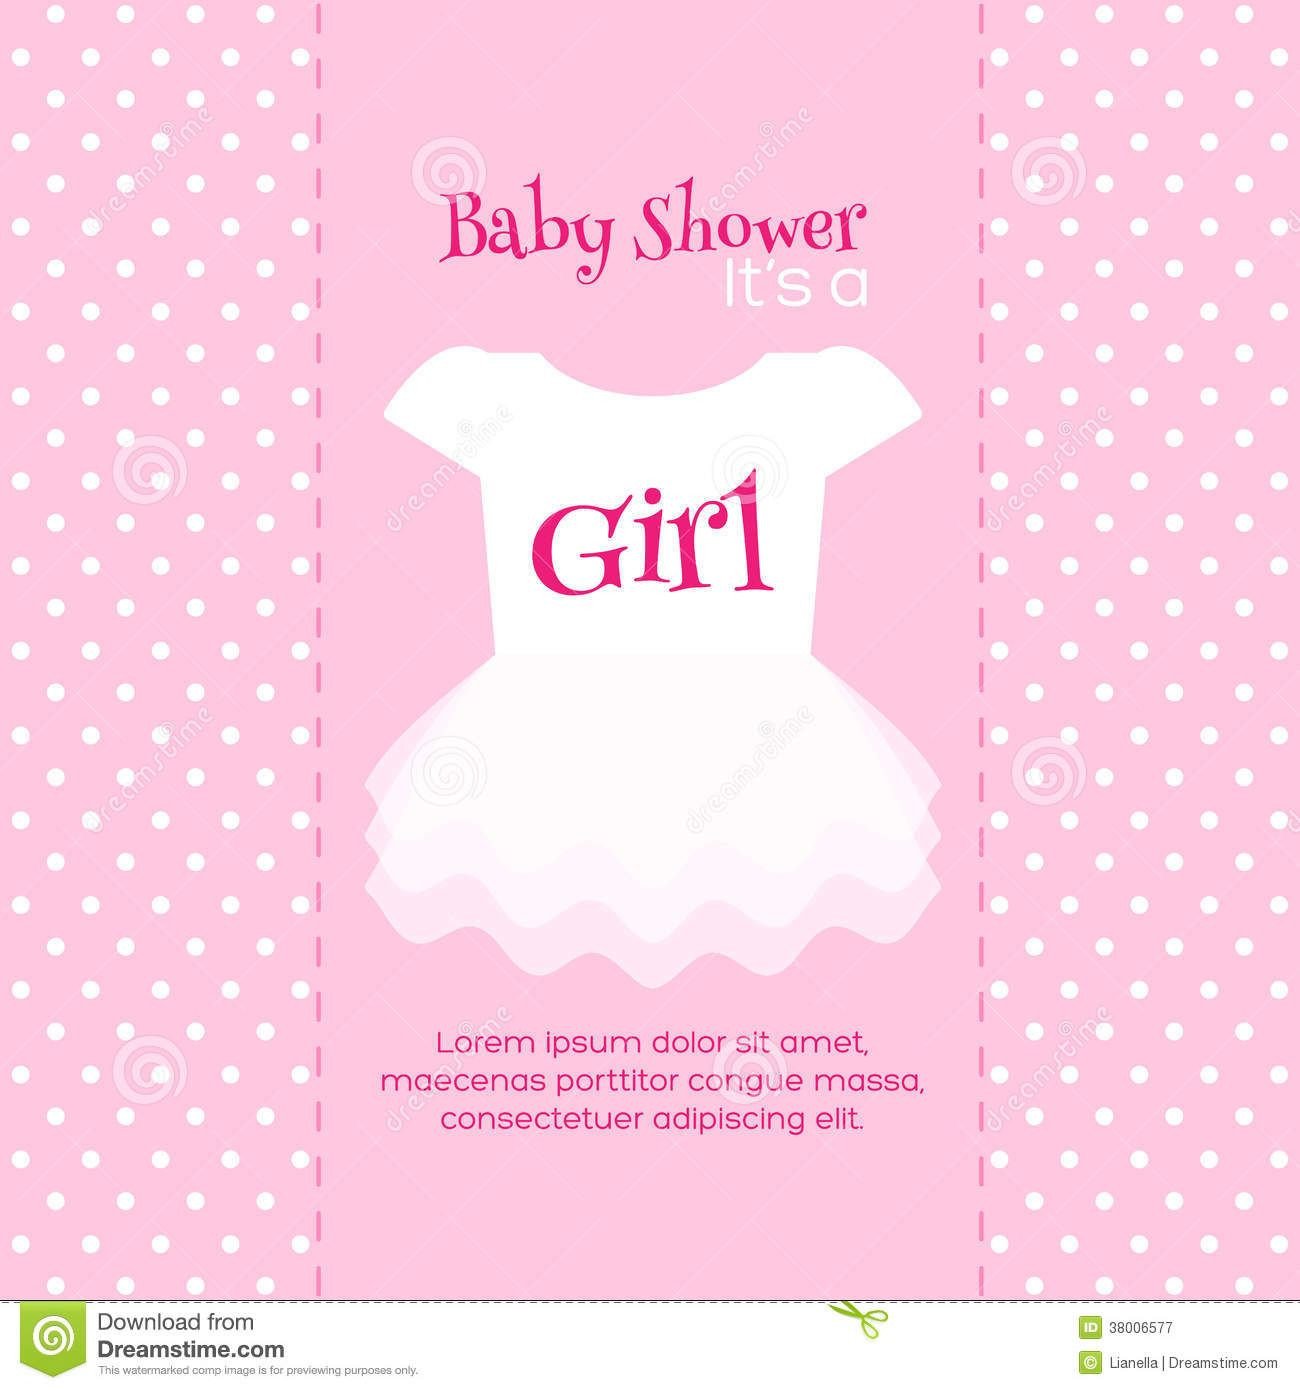 Design Free Printable Baby Shower Invitations for Girls